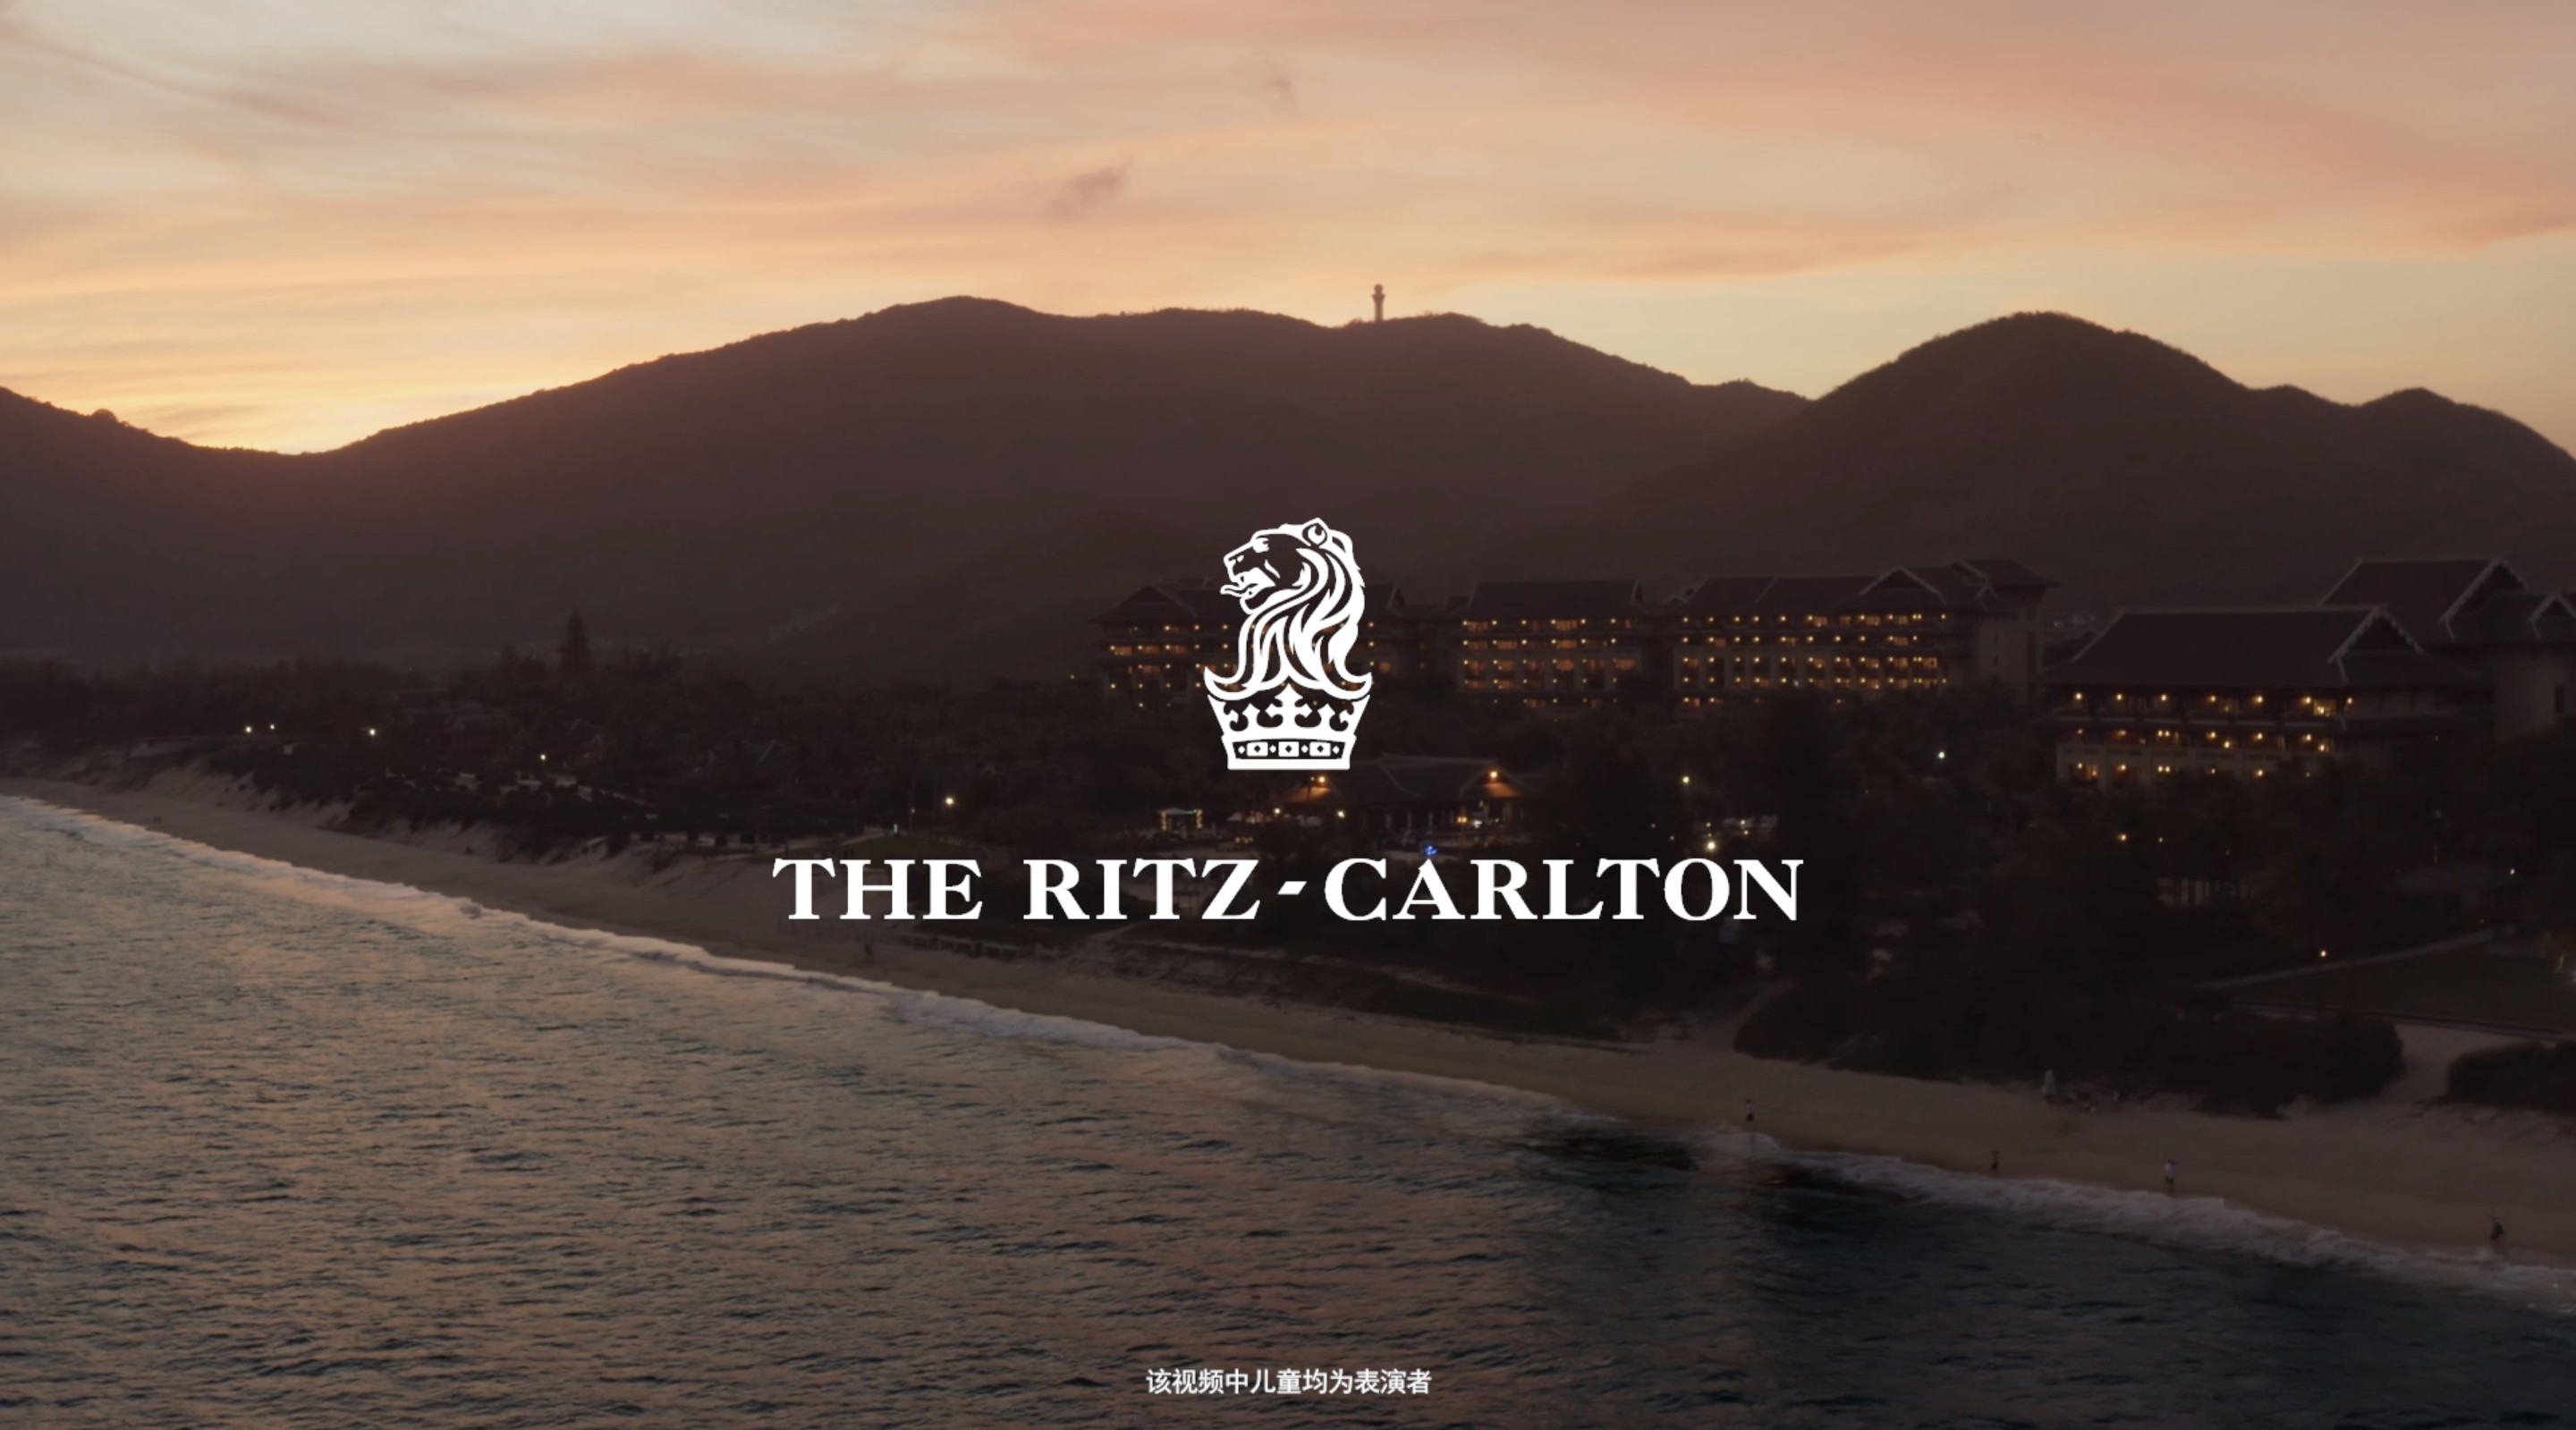 Ritz-Carlton 三亚丽思卡尔顿酒店2019 TVC 